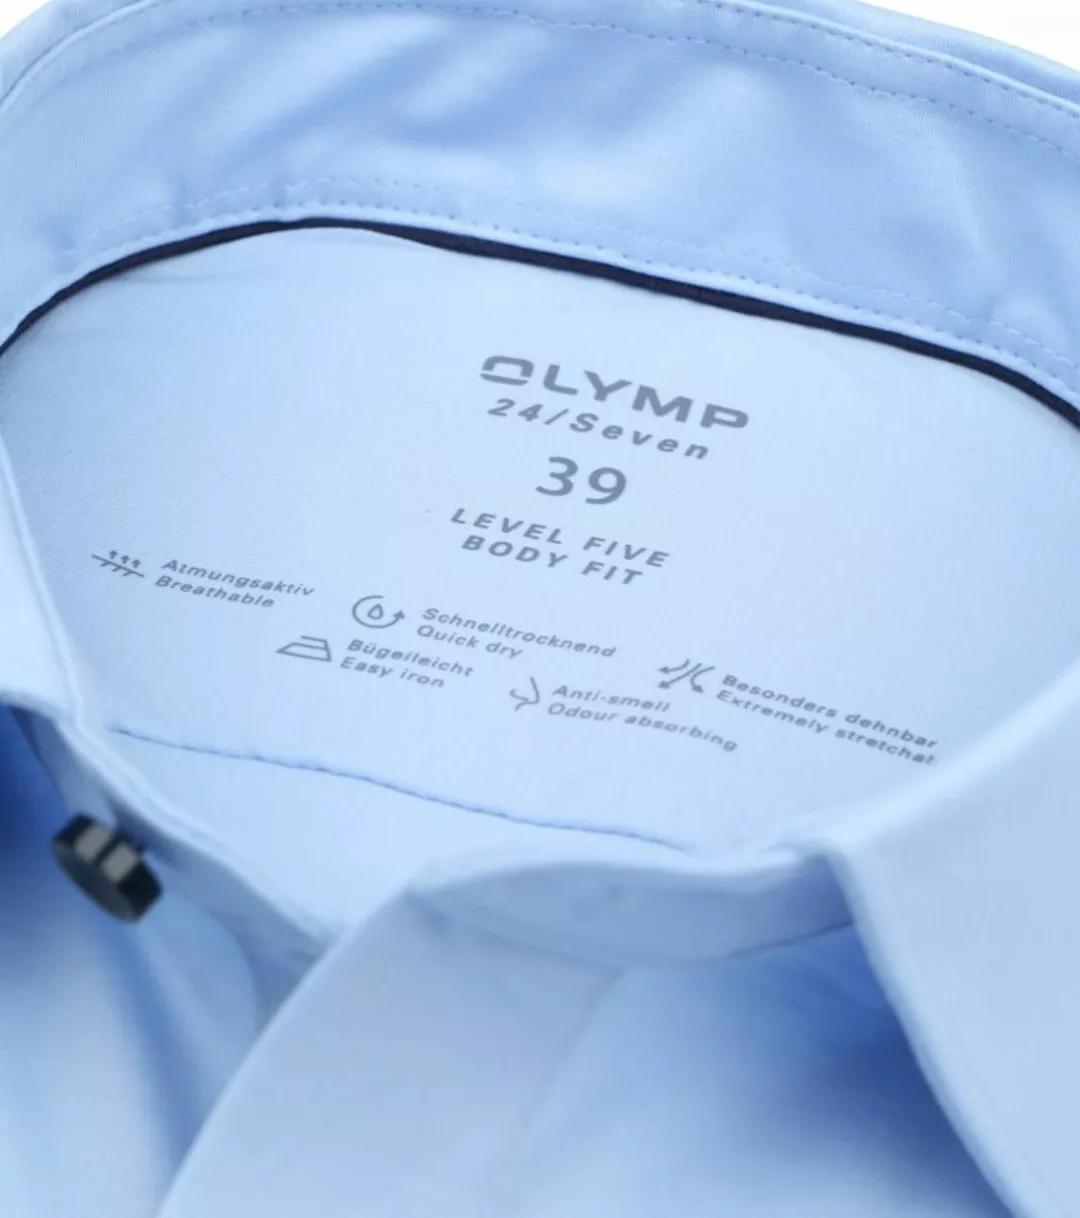 OLYMP Short Sleeve Hemd Level 5 24/Seven Helblau - Größe 45 günstig online kaufen